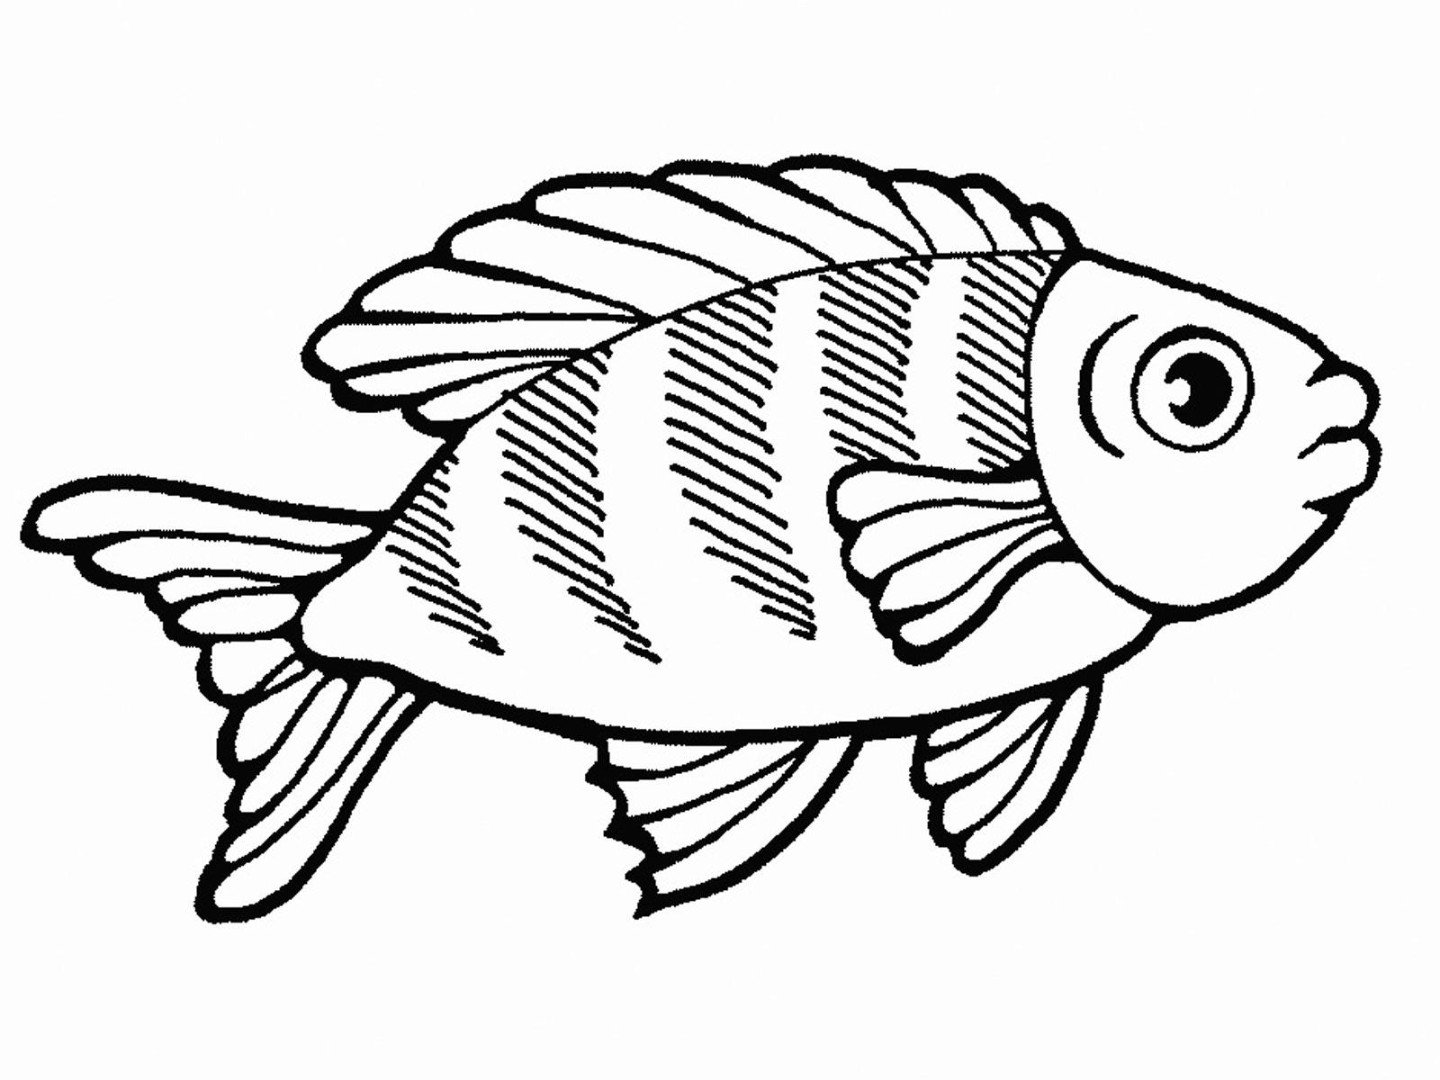 Раскраска-рыбки